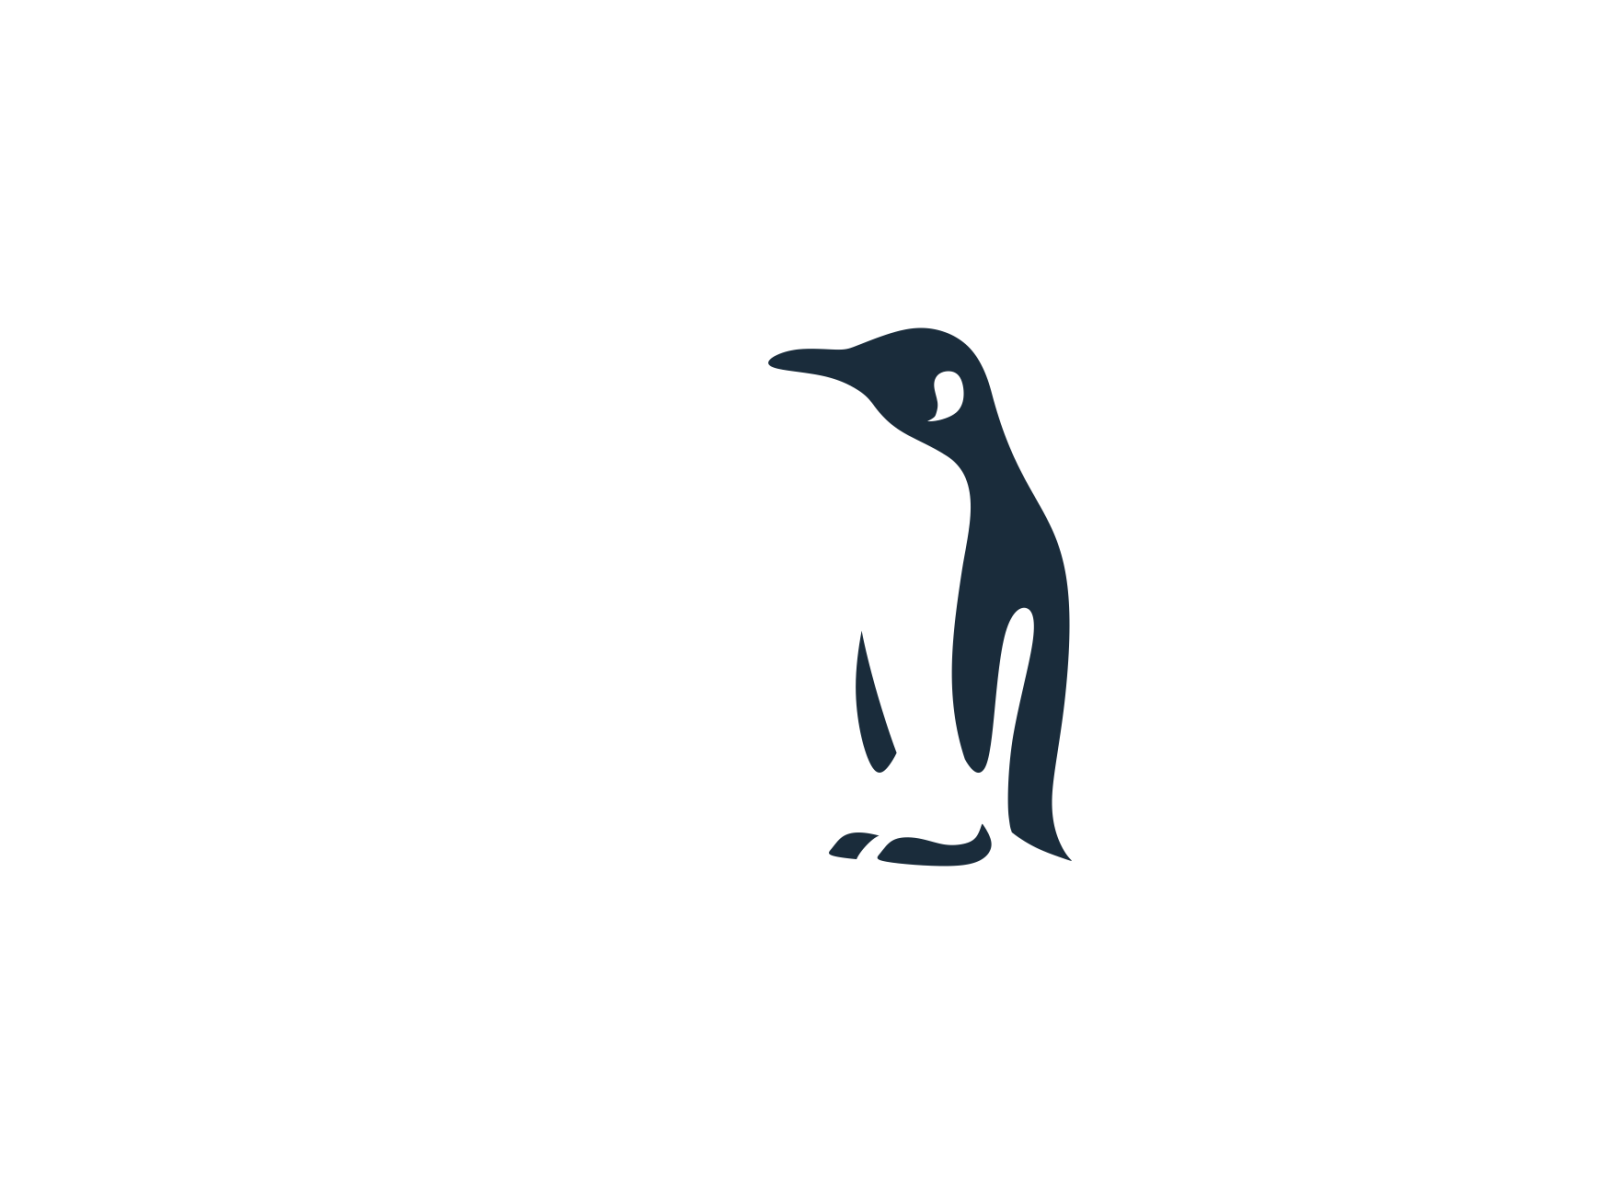 Penguin logo by Malinda Pitigala on Dribbble